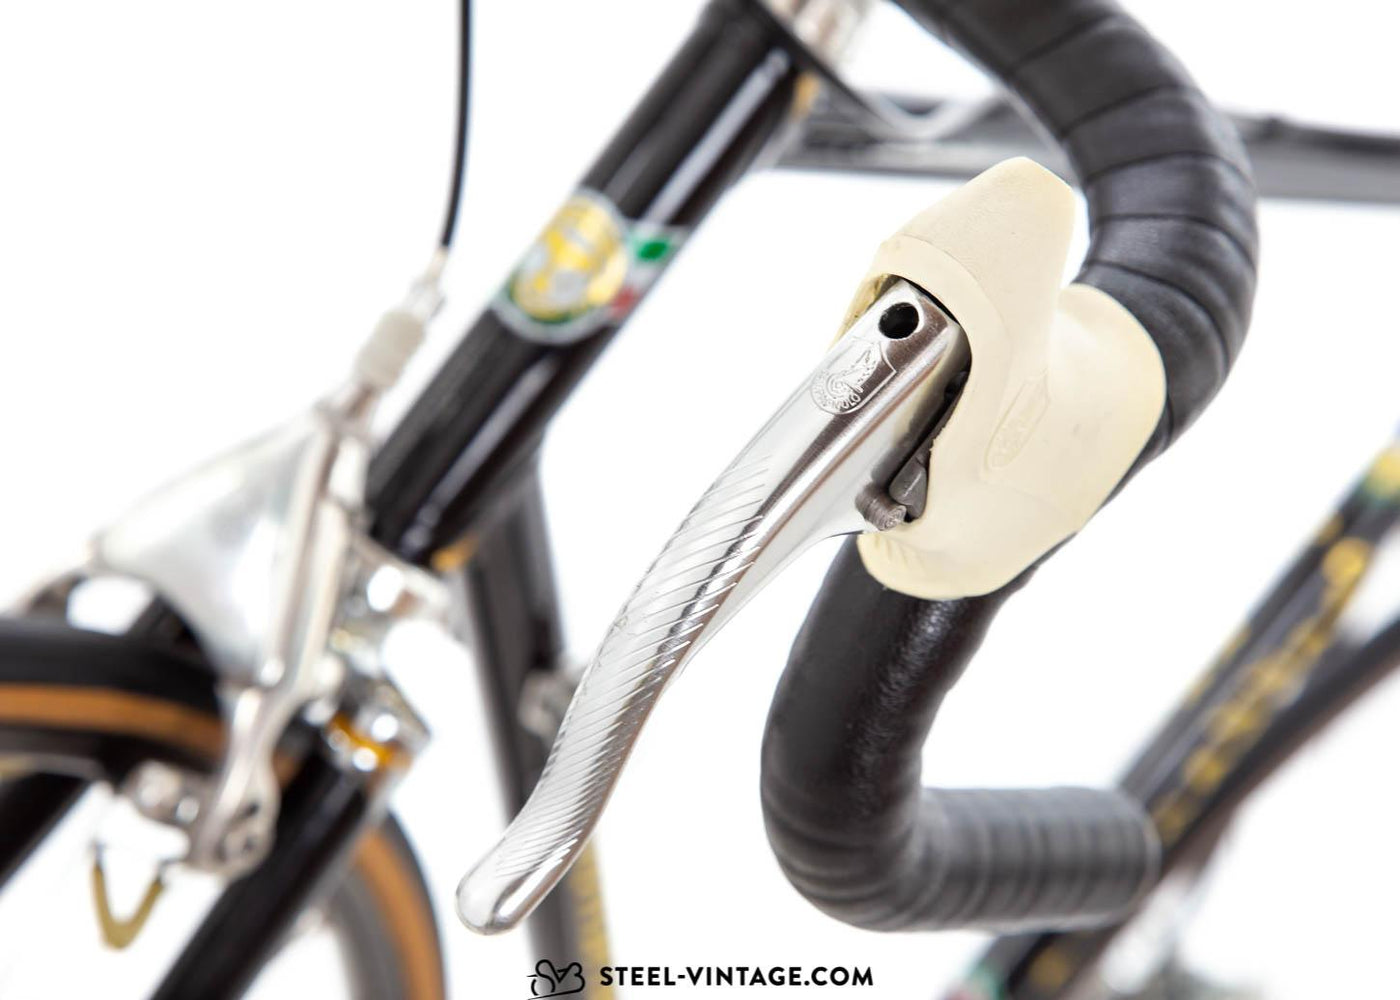 Tommasini Strada C-Record Fine Road Bicycle 1980s - Steel Vintage Bikes